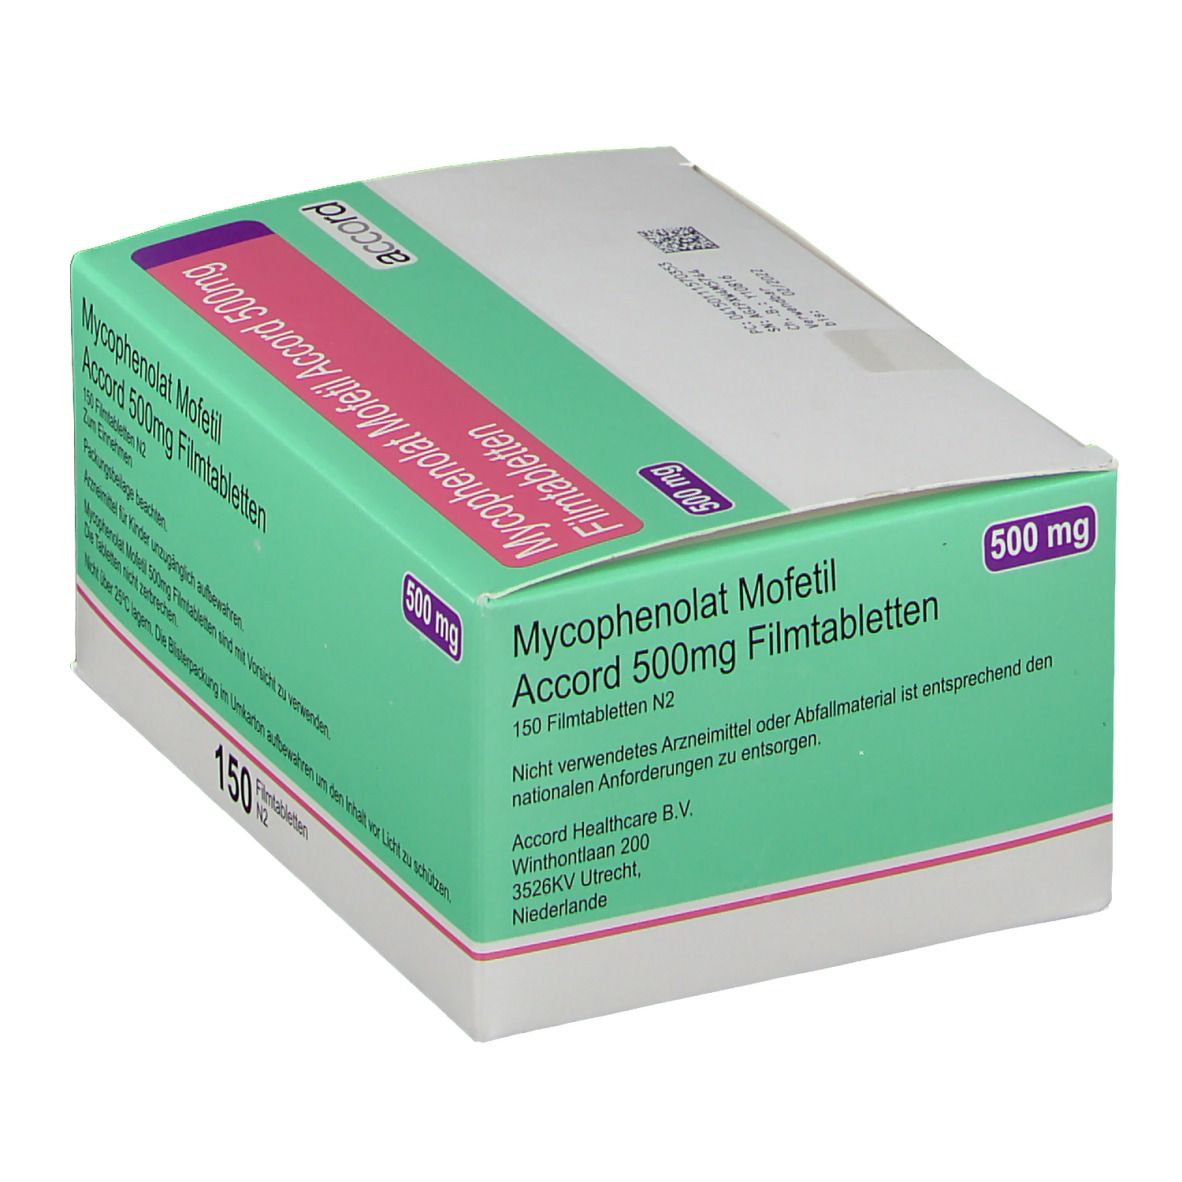 Mycophenolat Mofetil Accord 500 mg